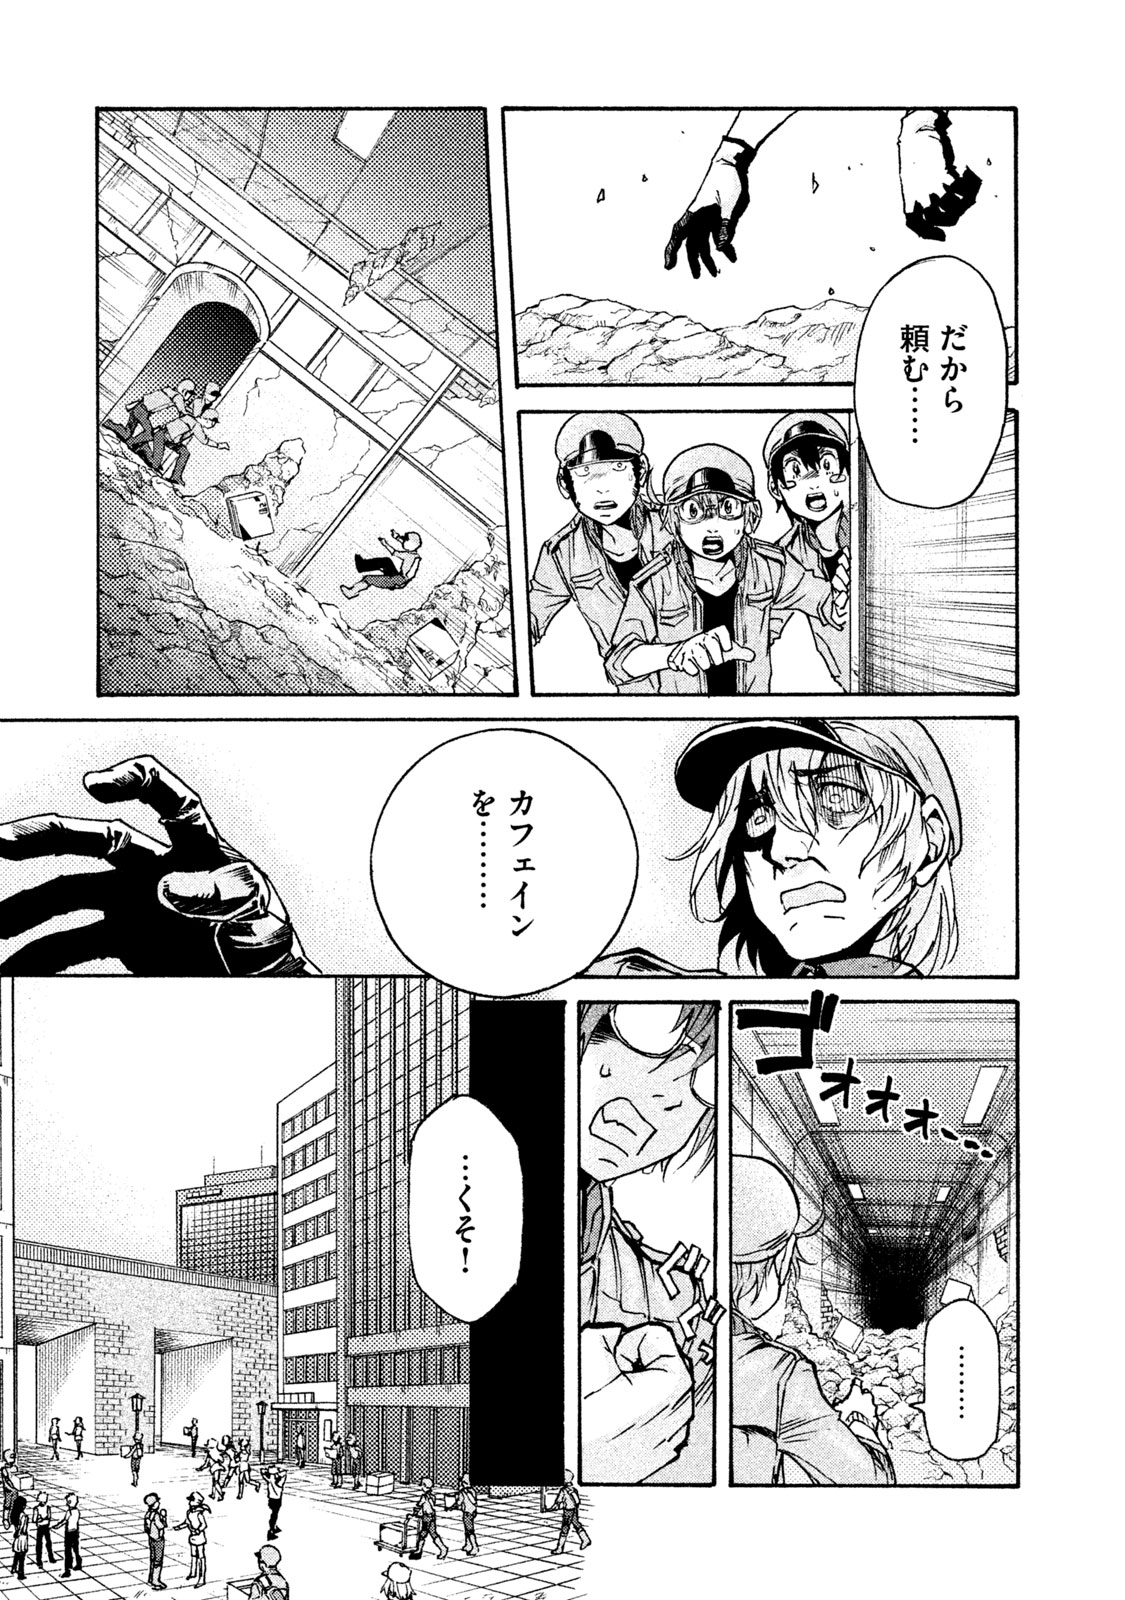 Hataraku Saibou BLACK - Chapter 12 - Page 19